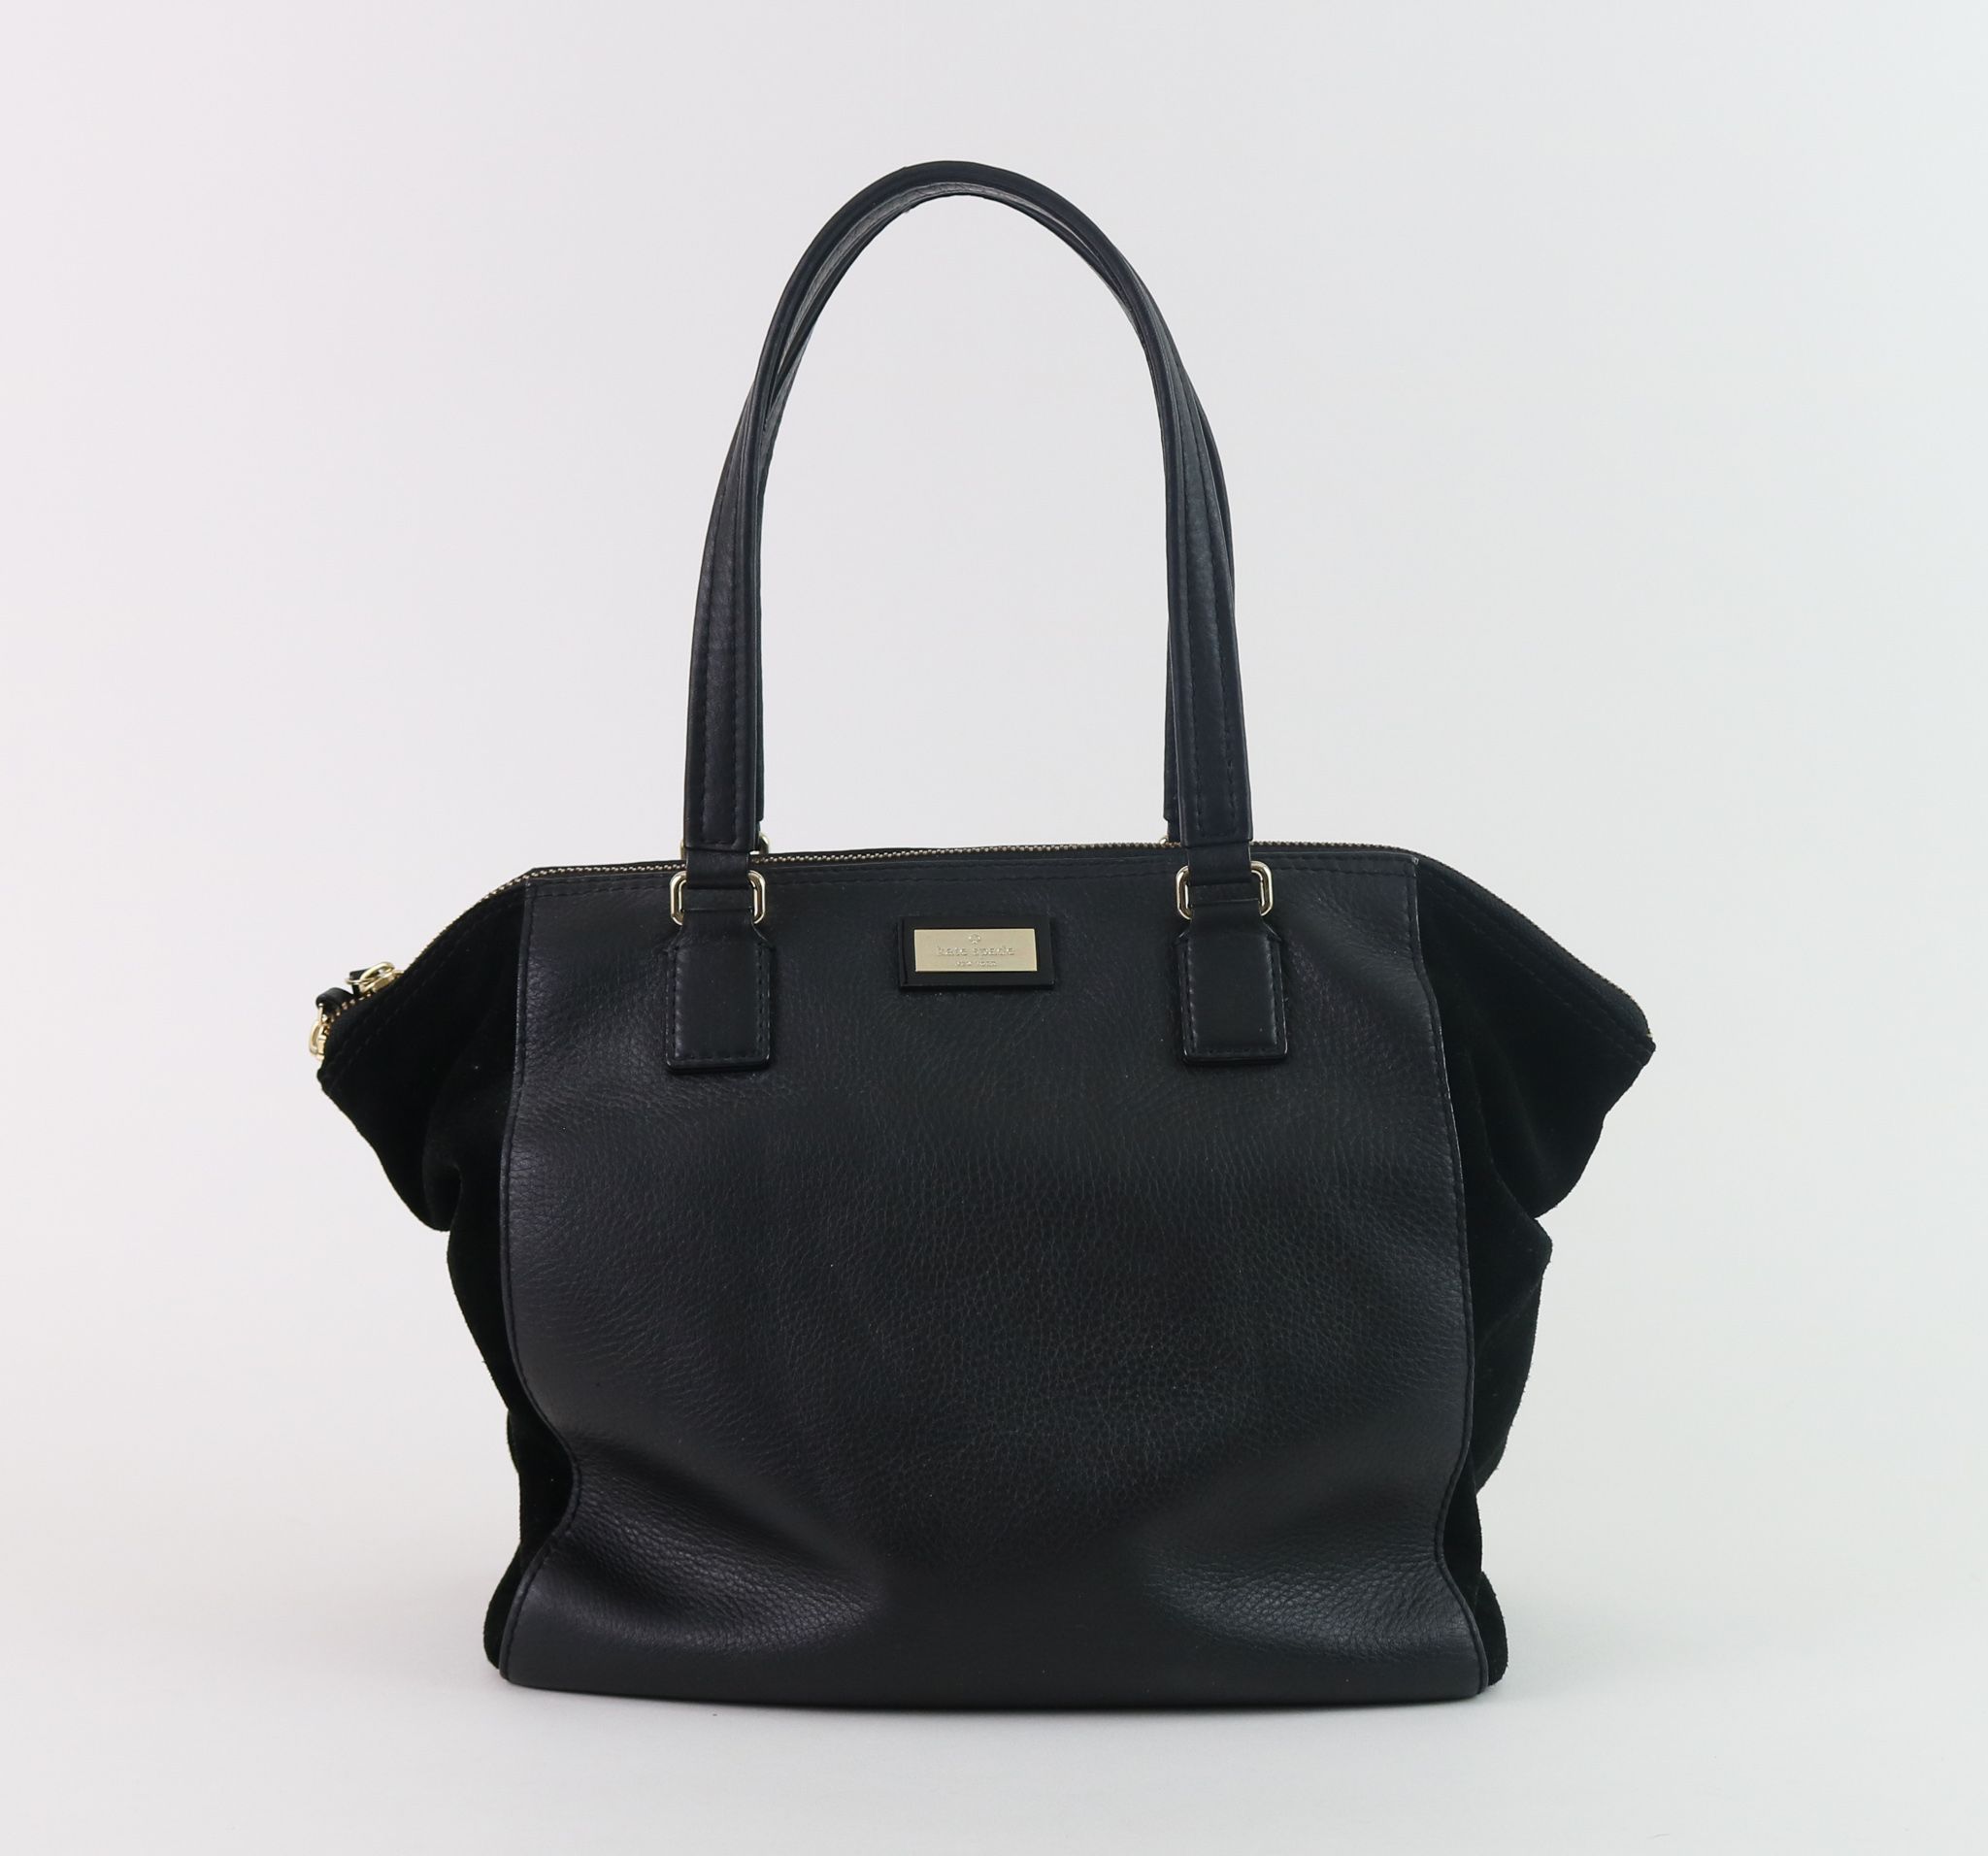 Kate Spade New York WKRU2736 Black Leather Carry All Tote Bag Handbag Purse $85 Or Best Offer